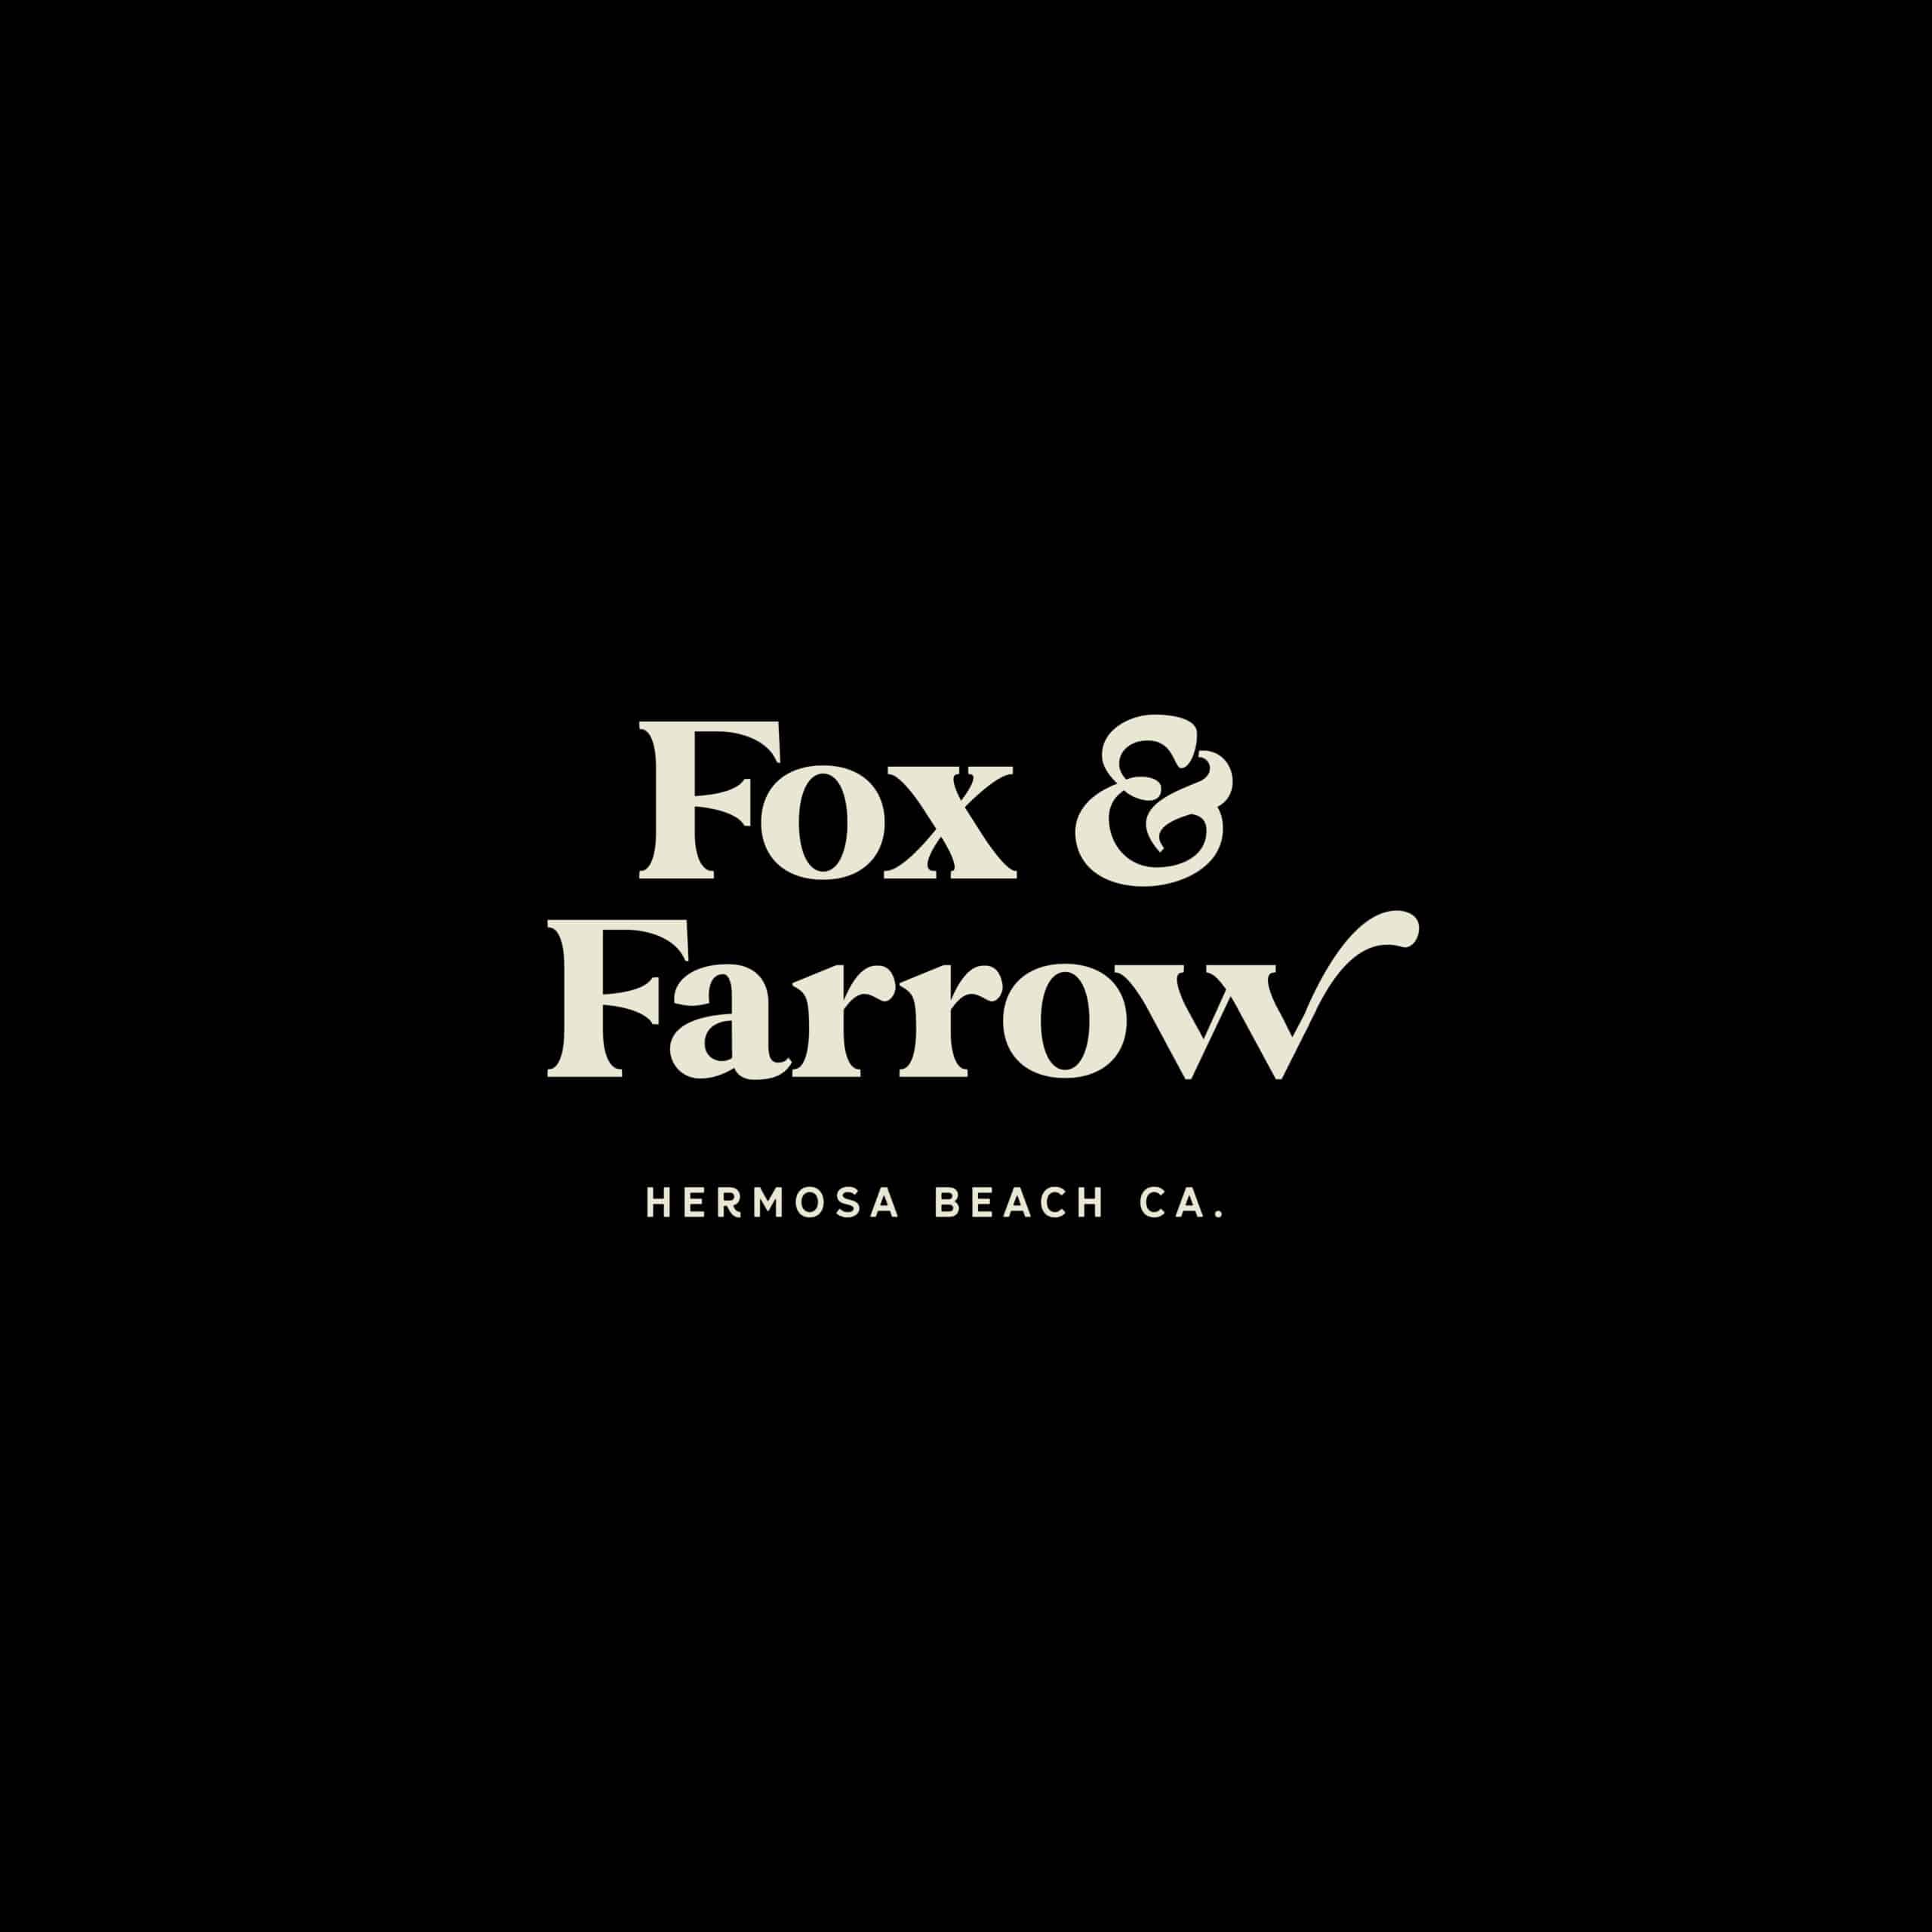 Fox and Farrow Restaurant Branding and Logo Design By Stellen Design Branding Agency in Los Angeles CA